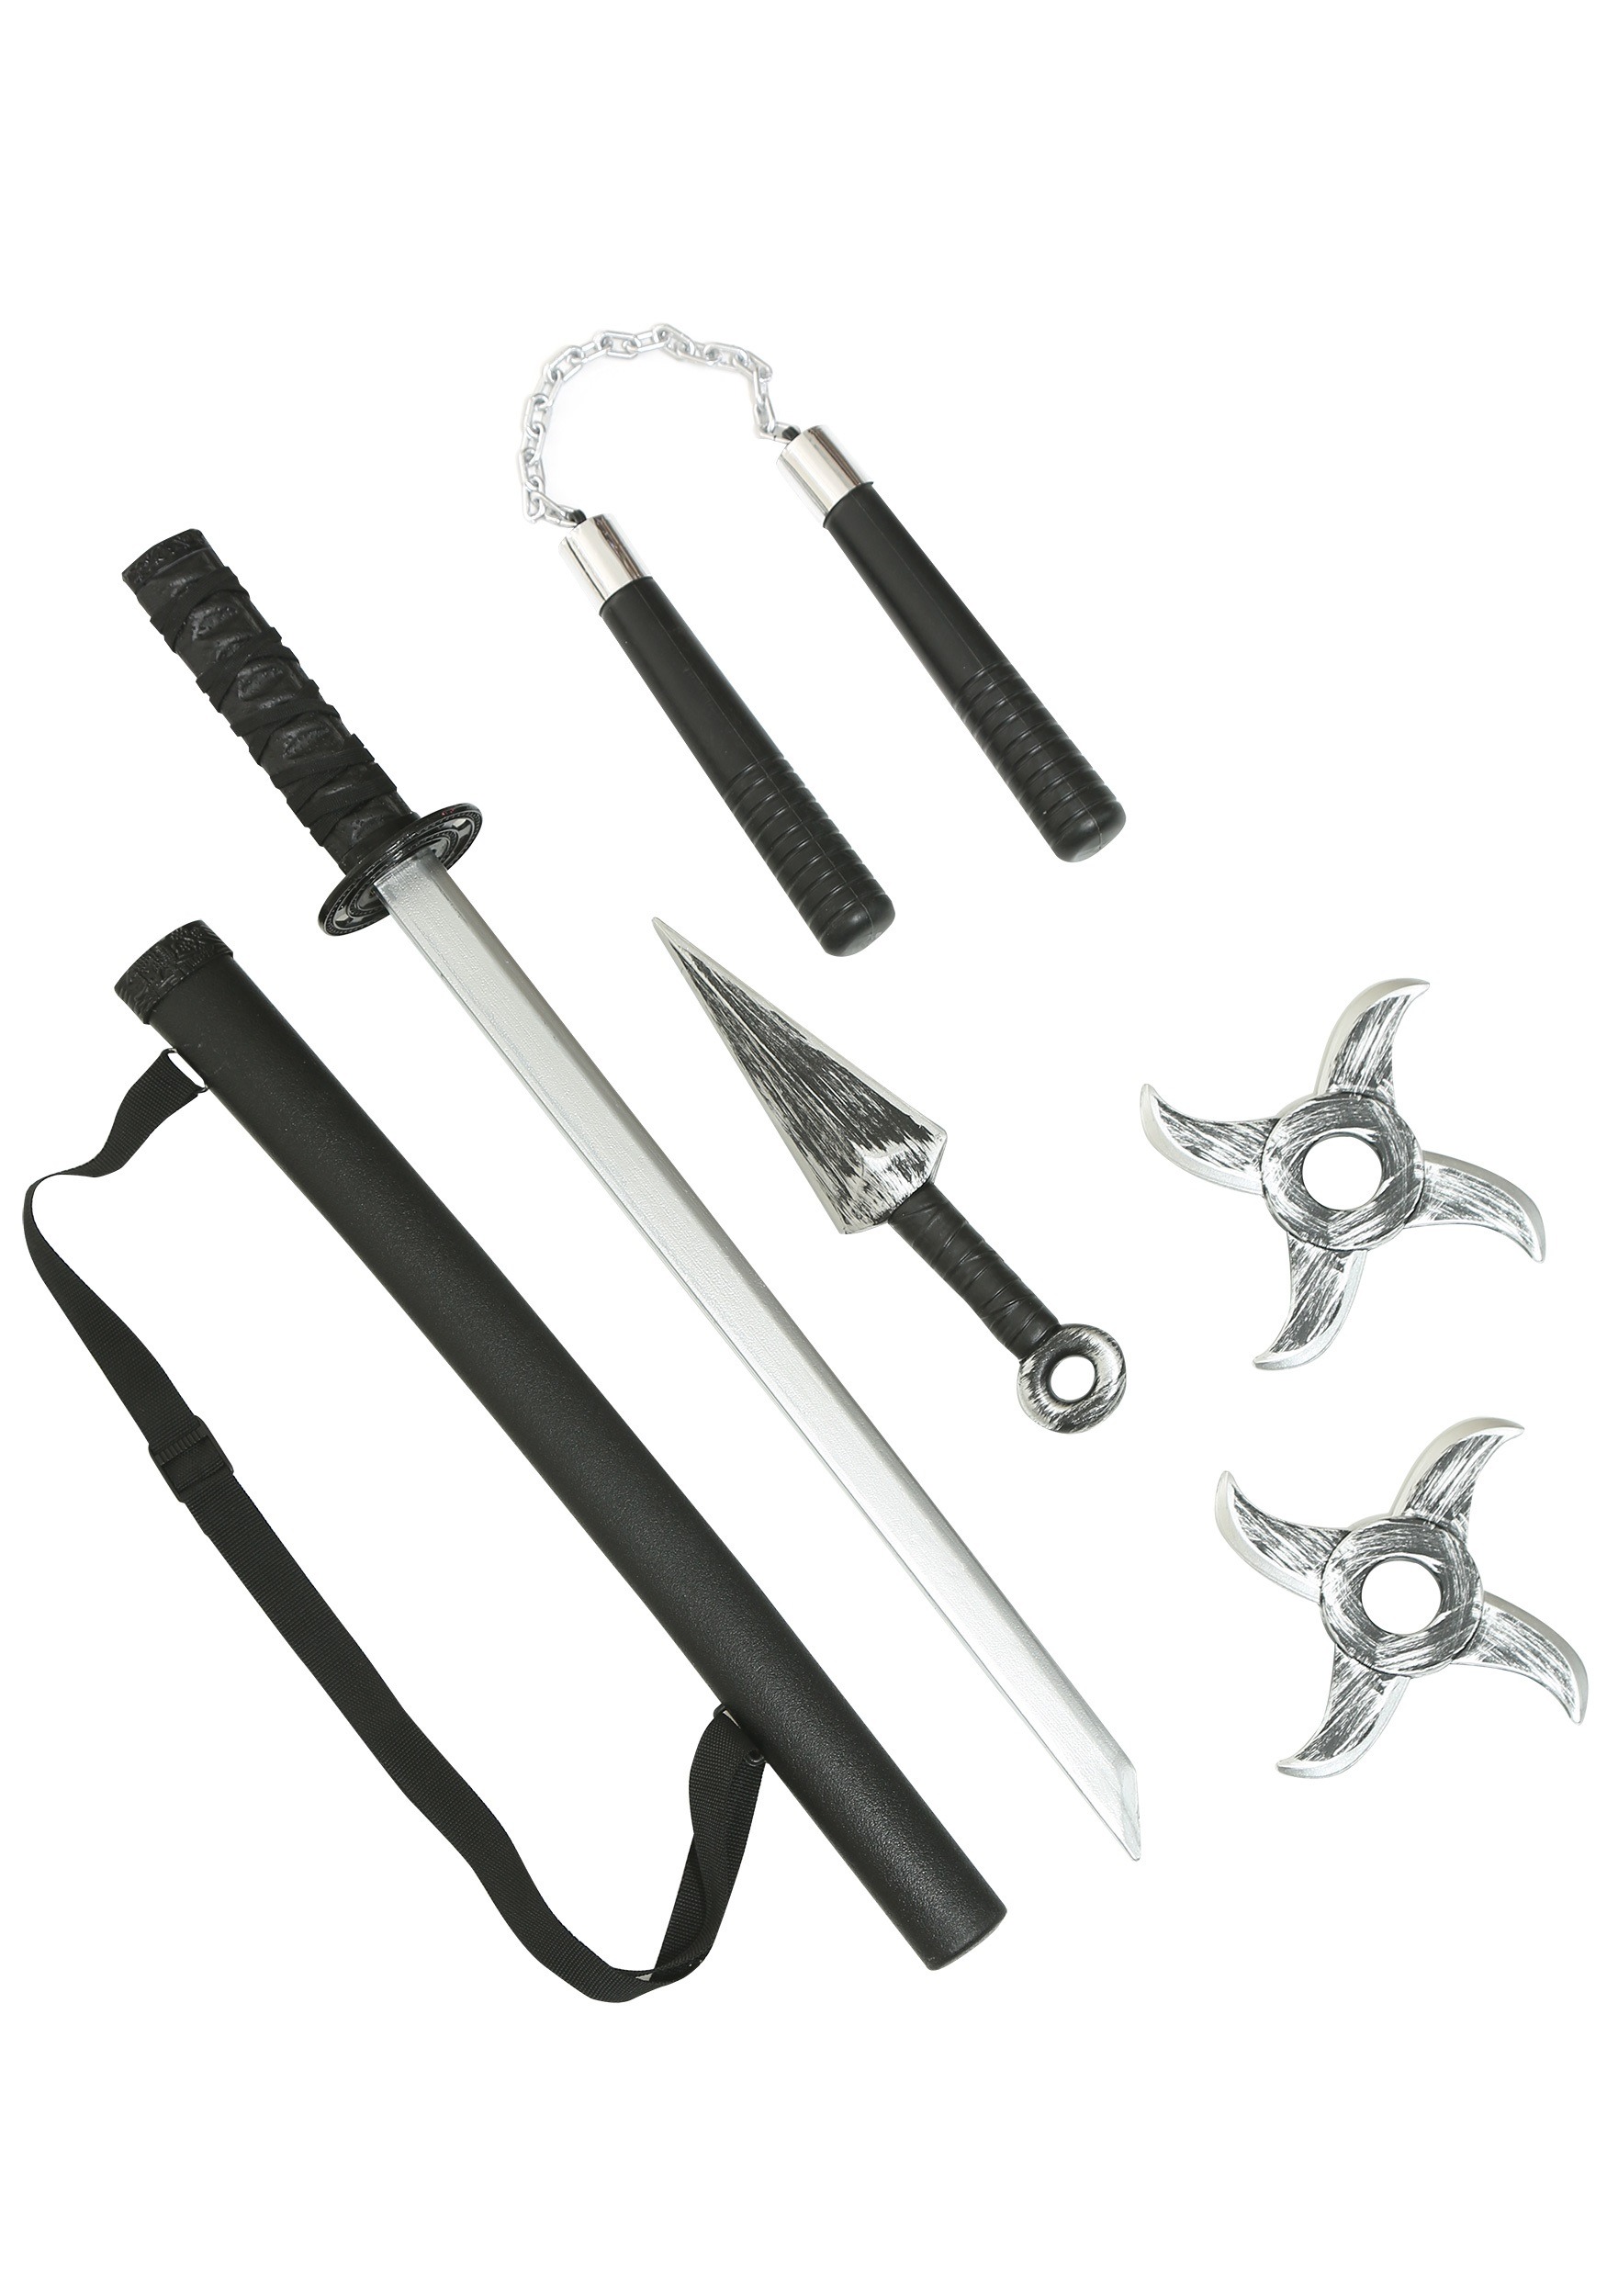 https://images.halloweencostumes.com/products/38122/1-1/child-ninja-accessory-kit.jpg